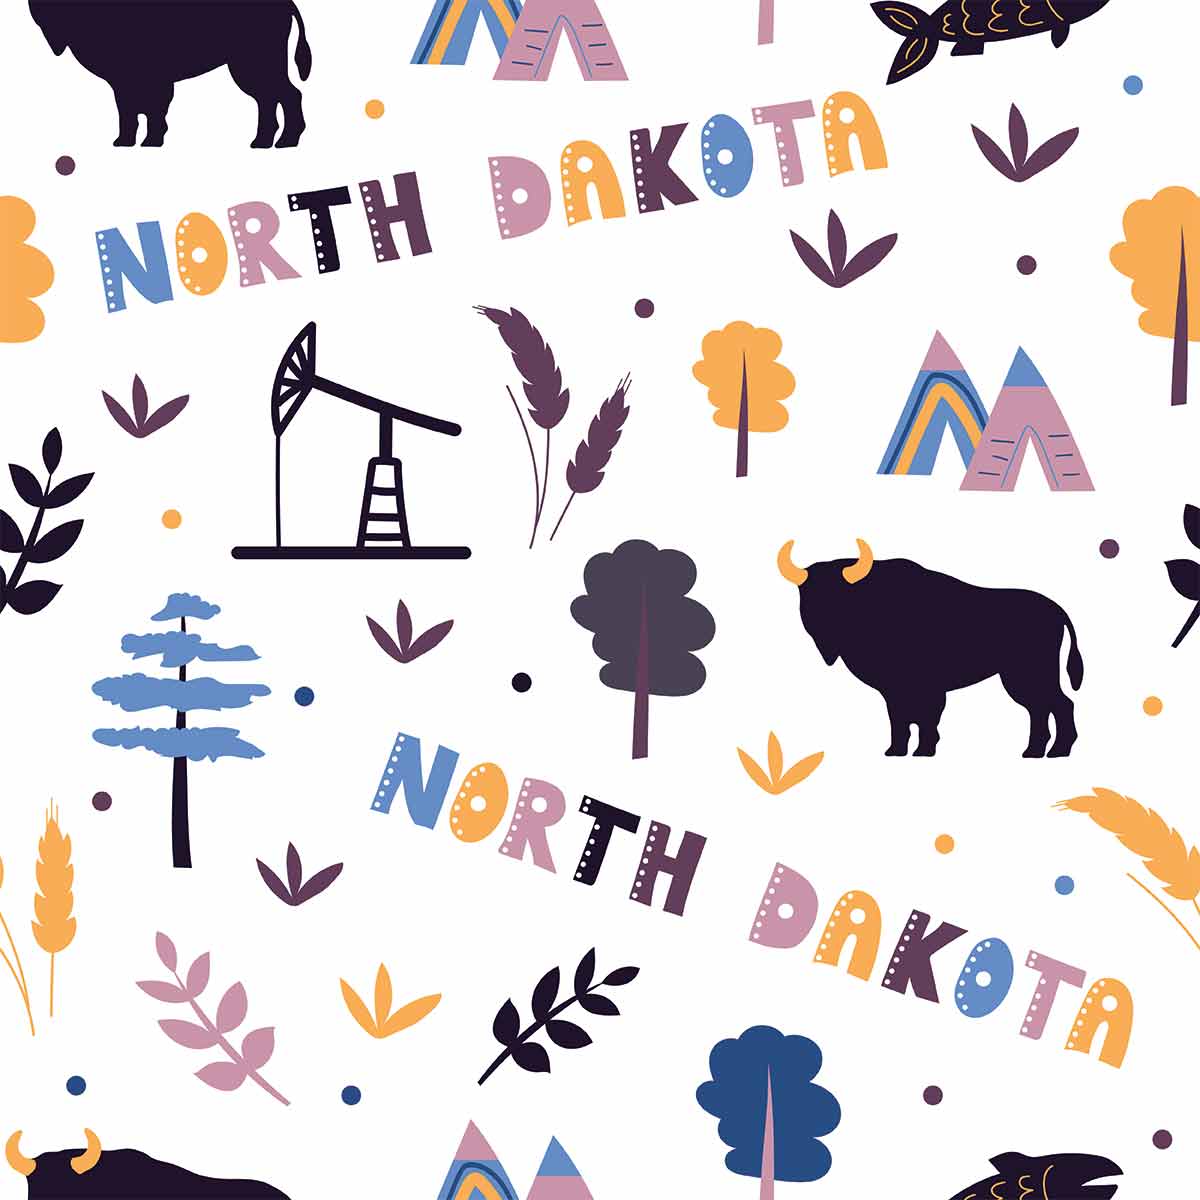 north dakota icons